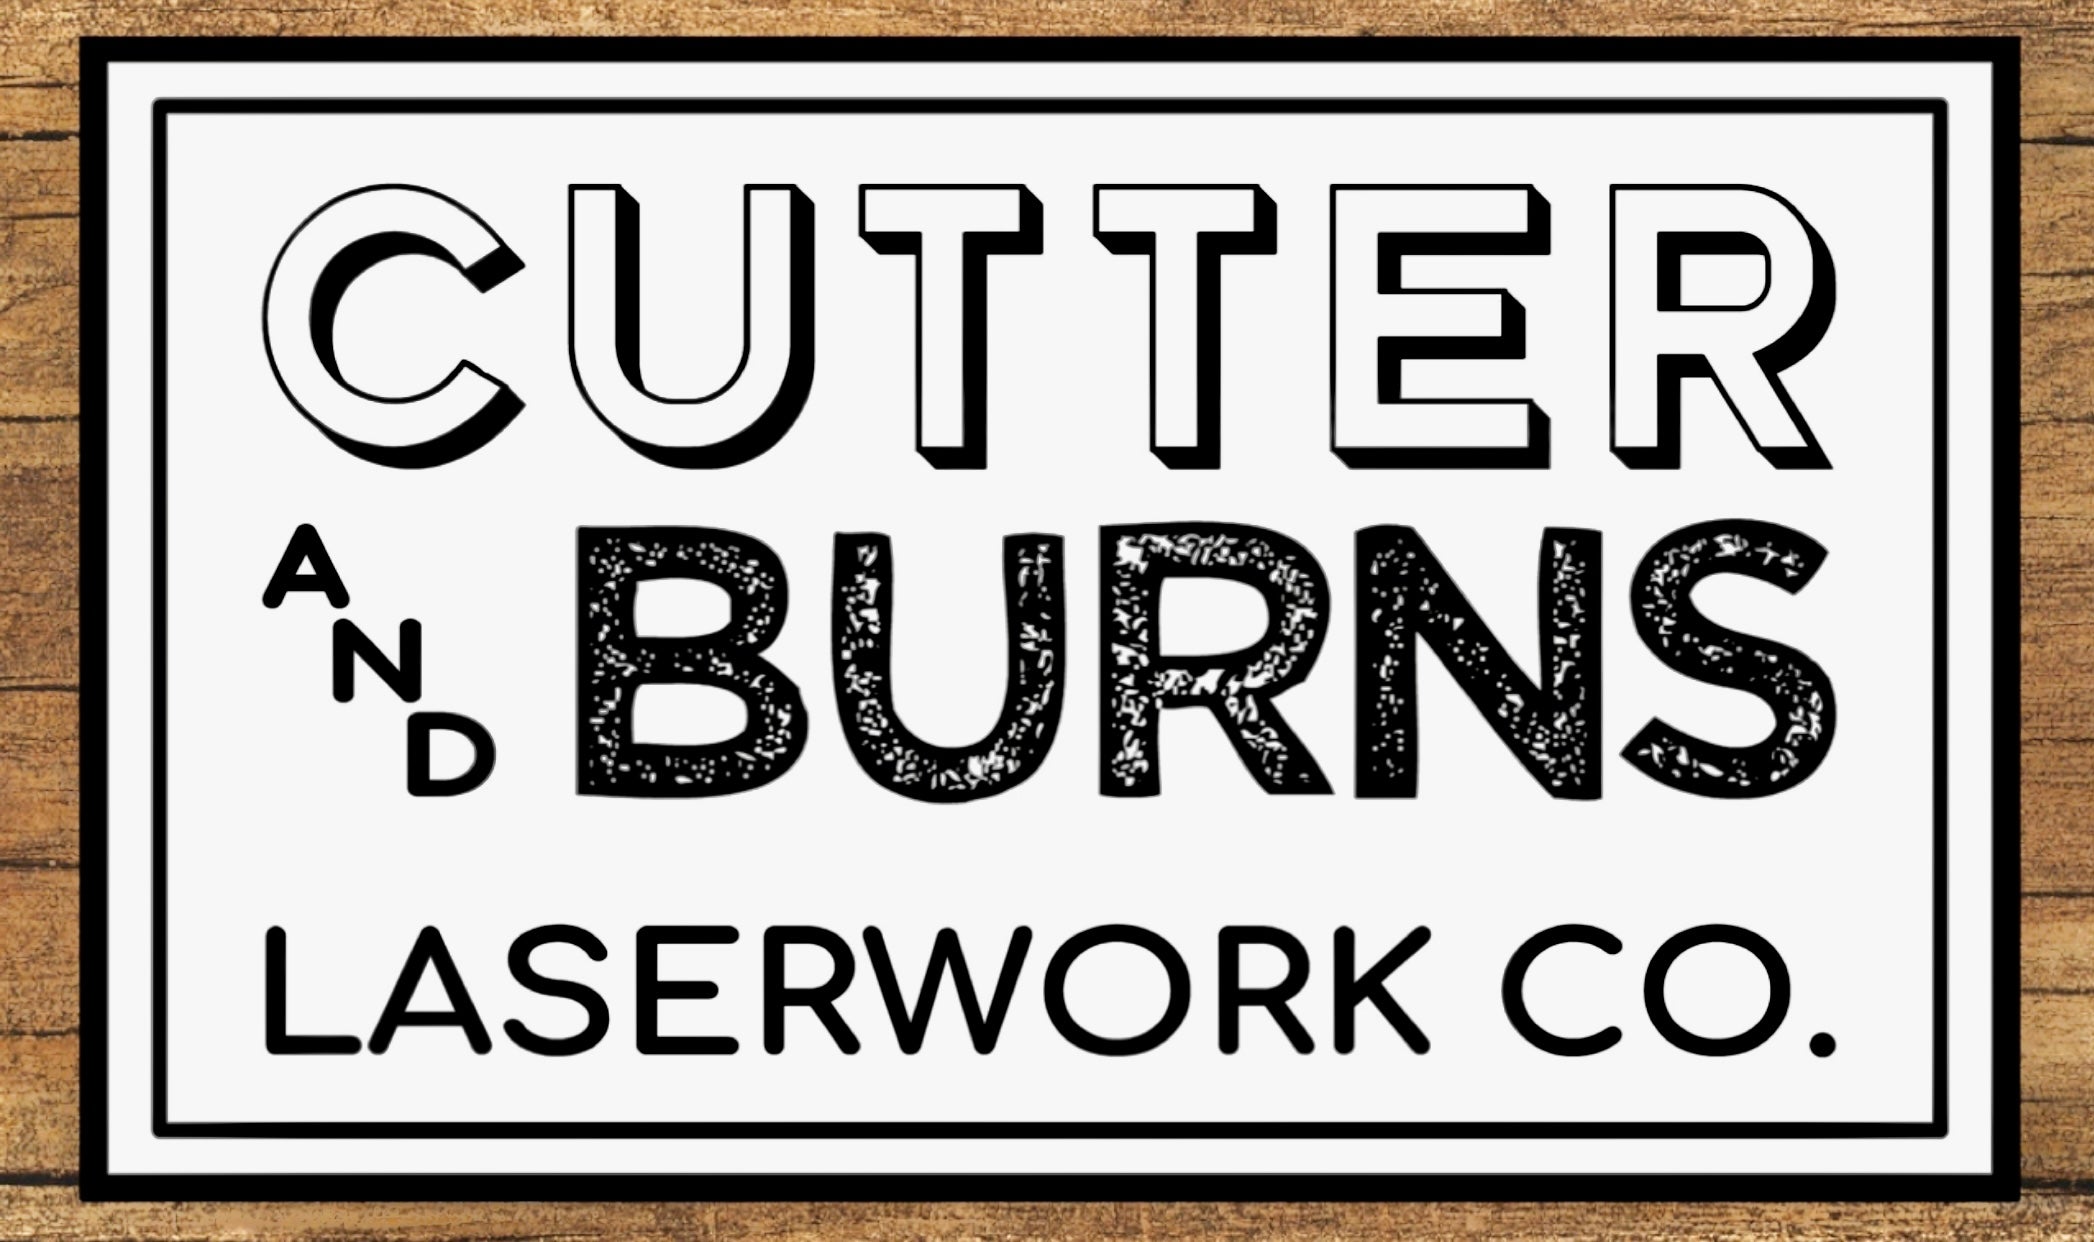 Cutter and Burns Laserwork Co.